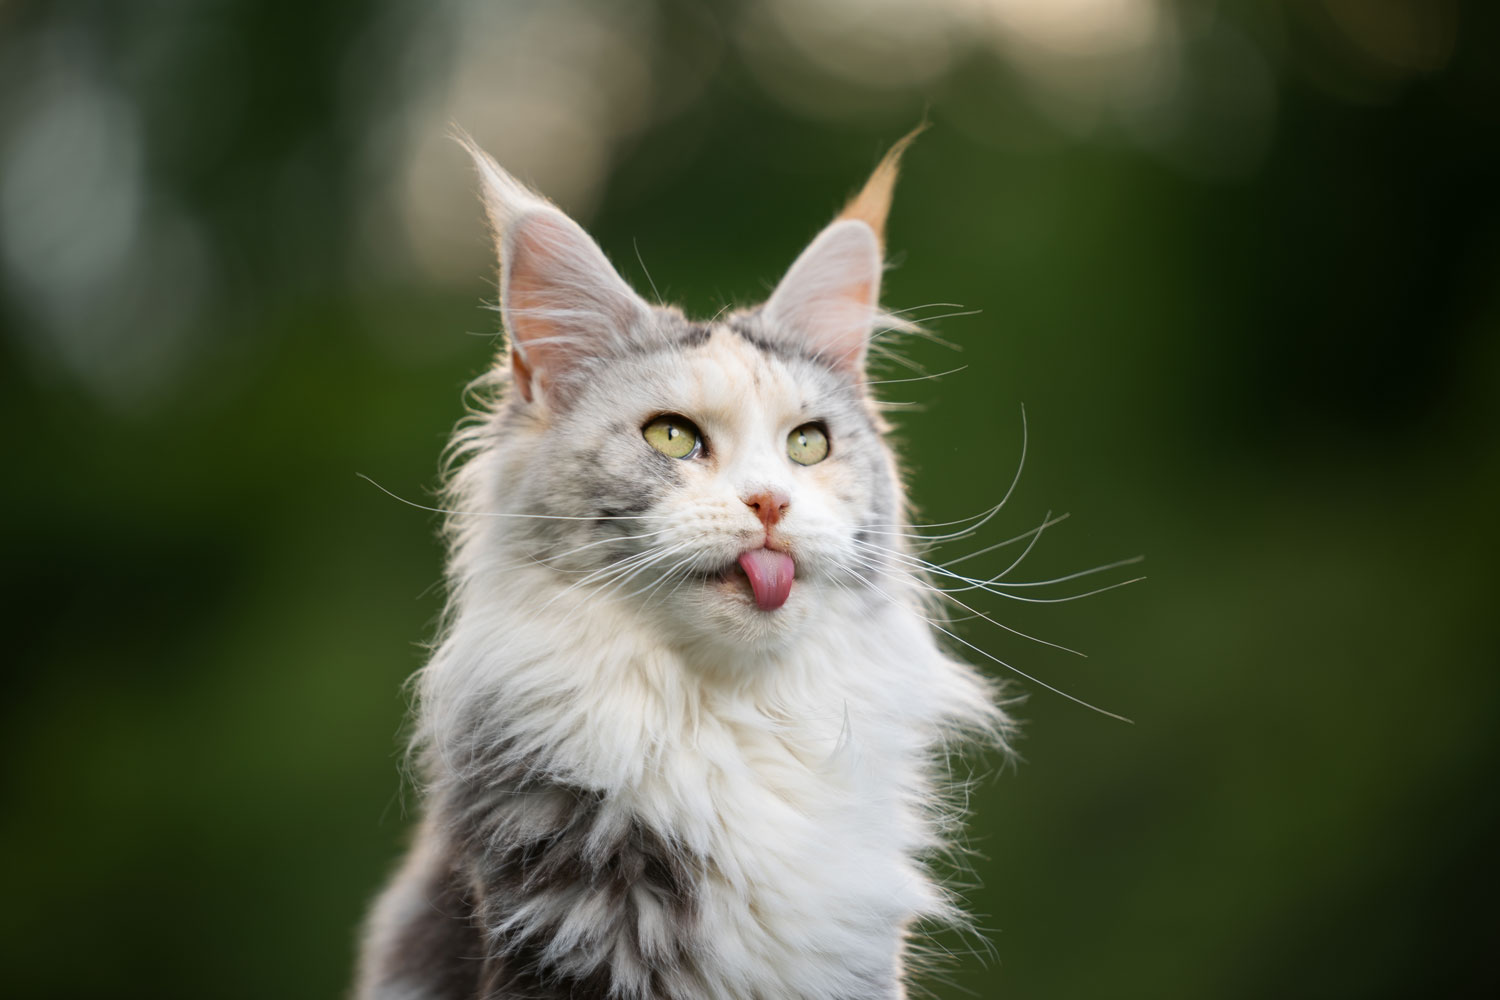 Un precioso gato maine coon sacando la lengua sin motivo alguno